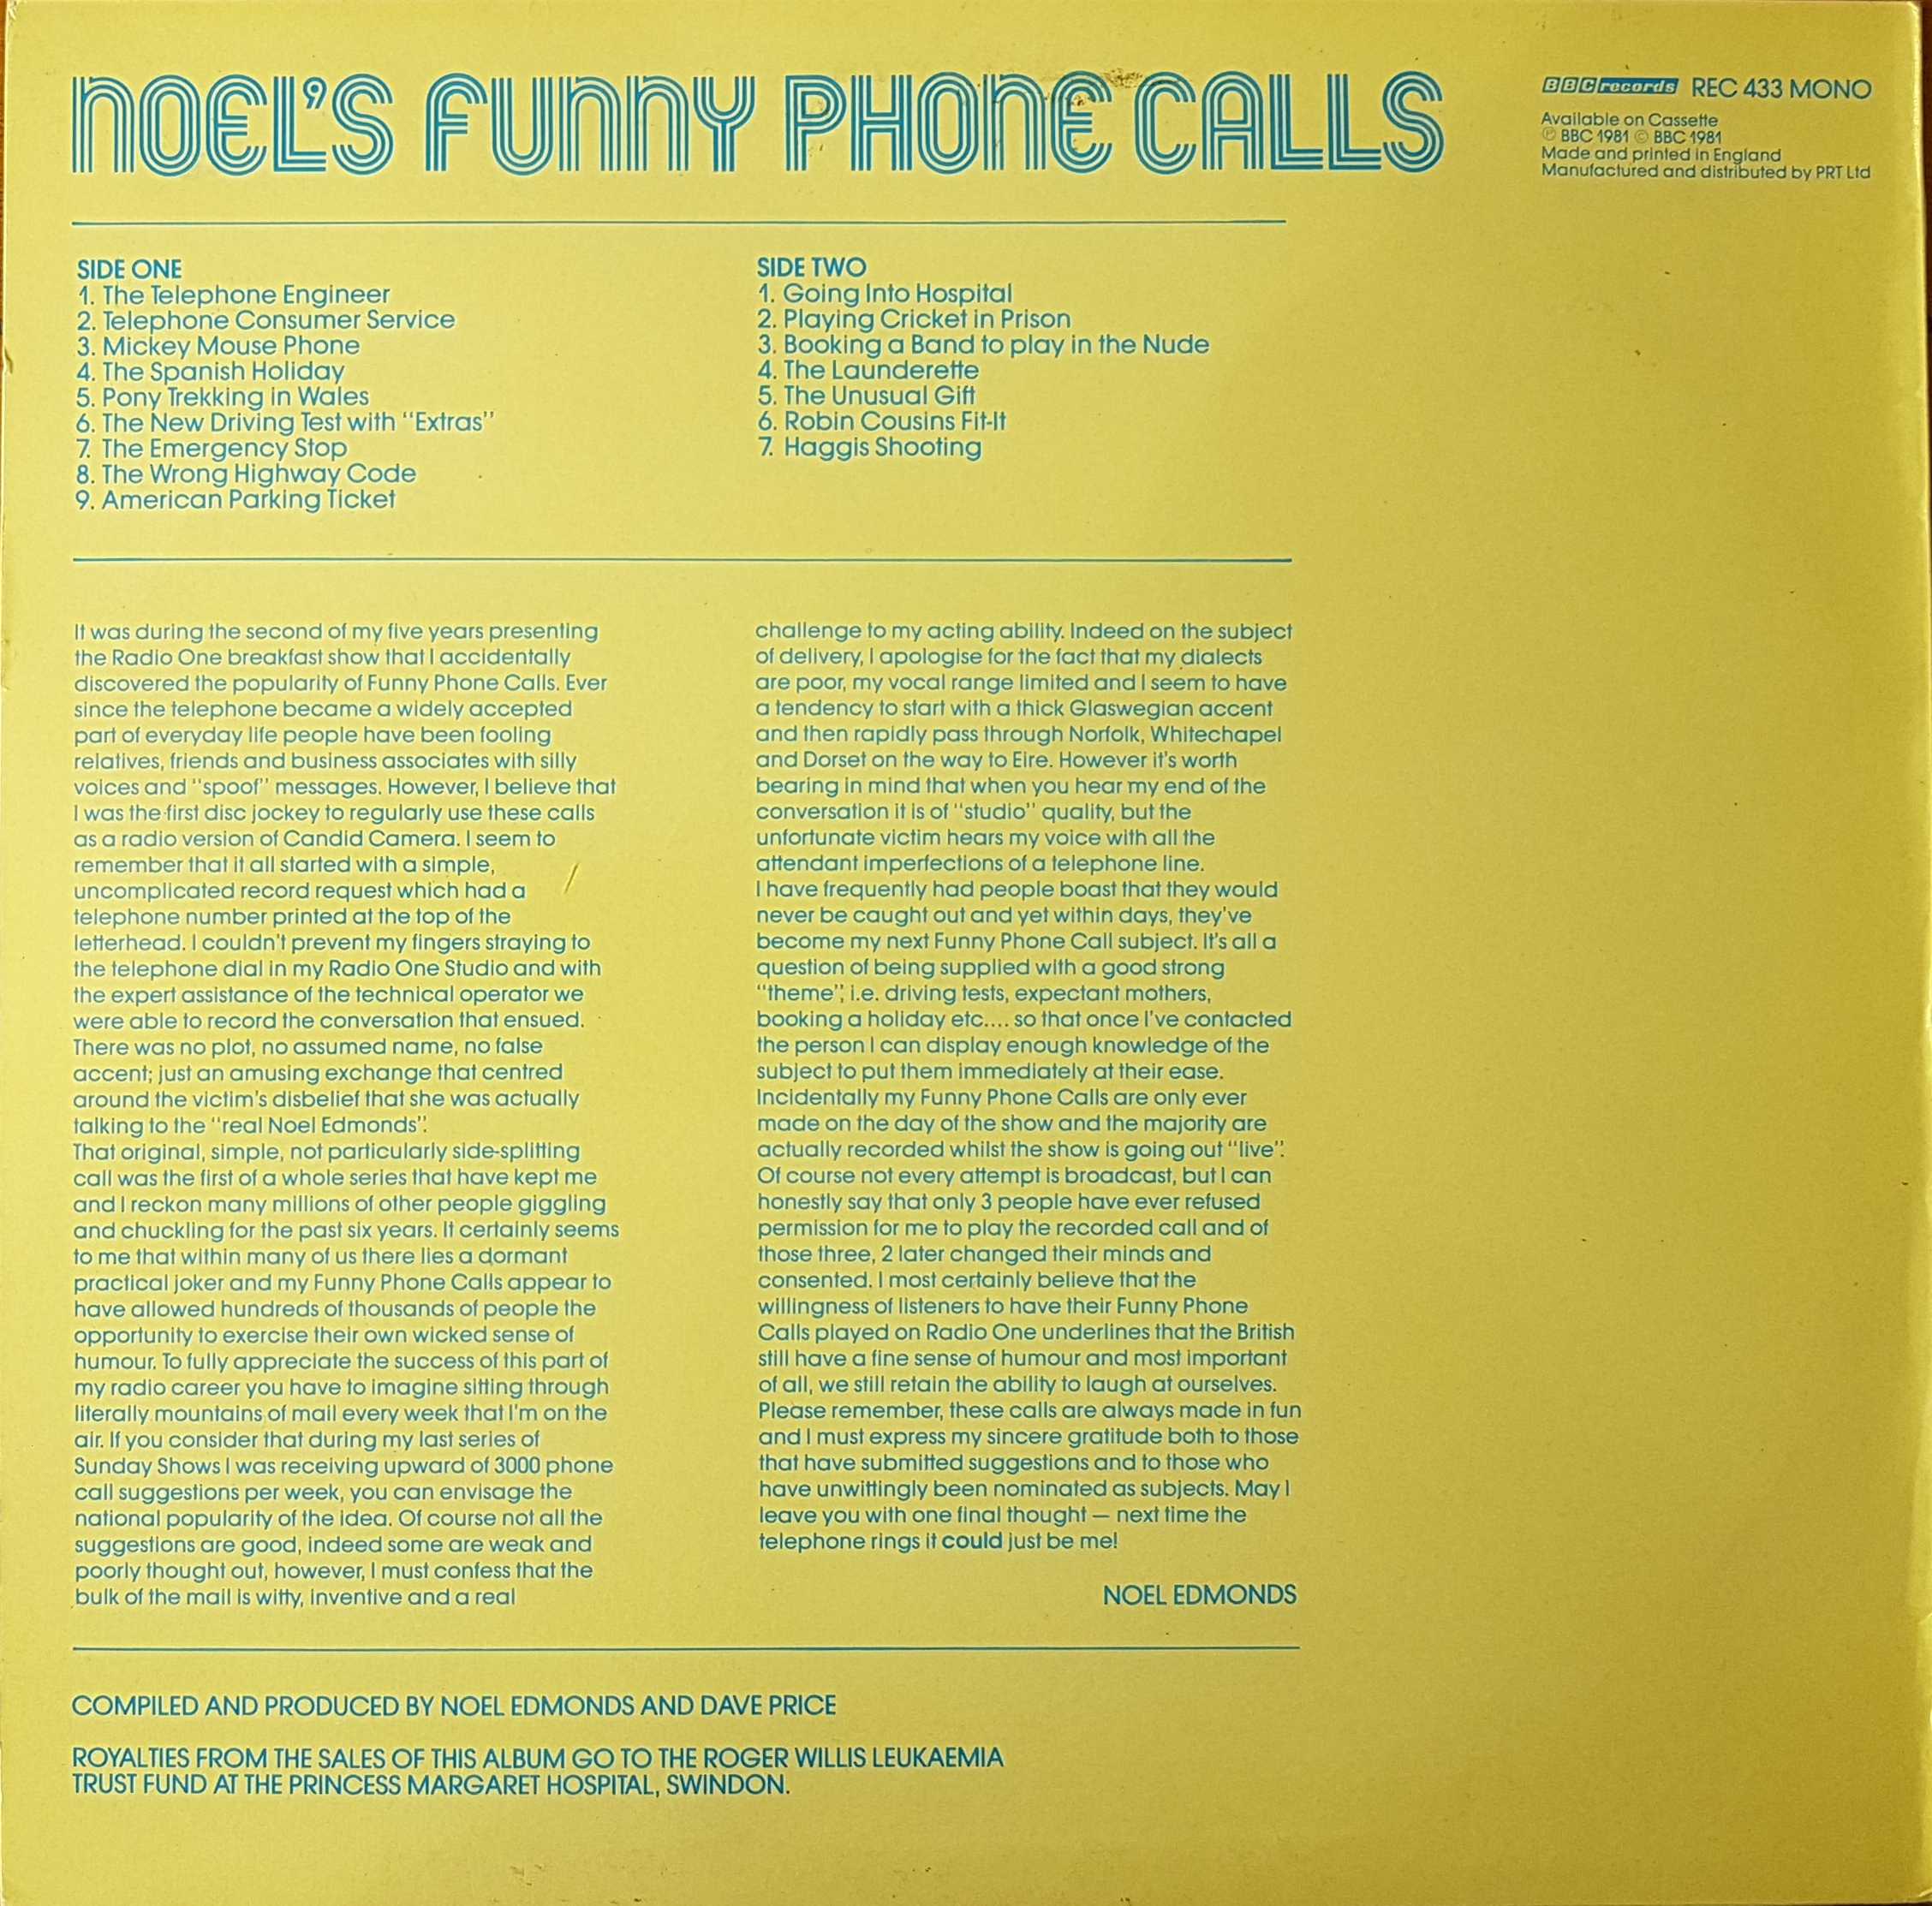 Noel's funny phone calls